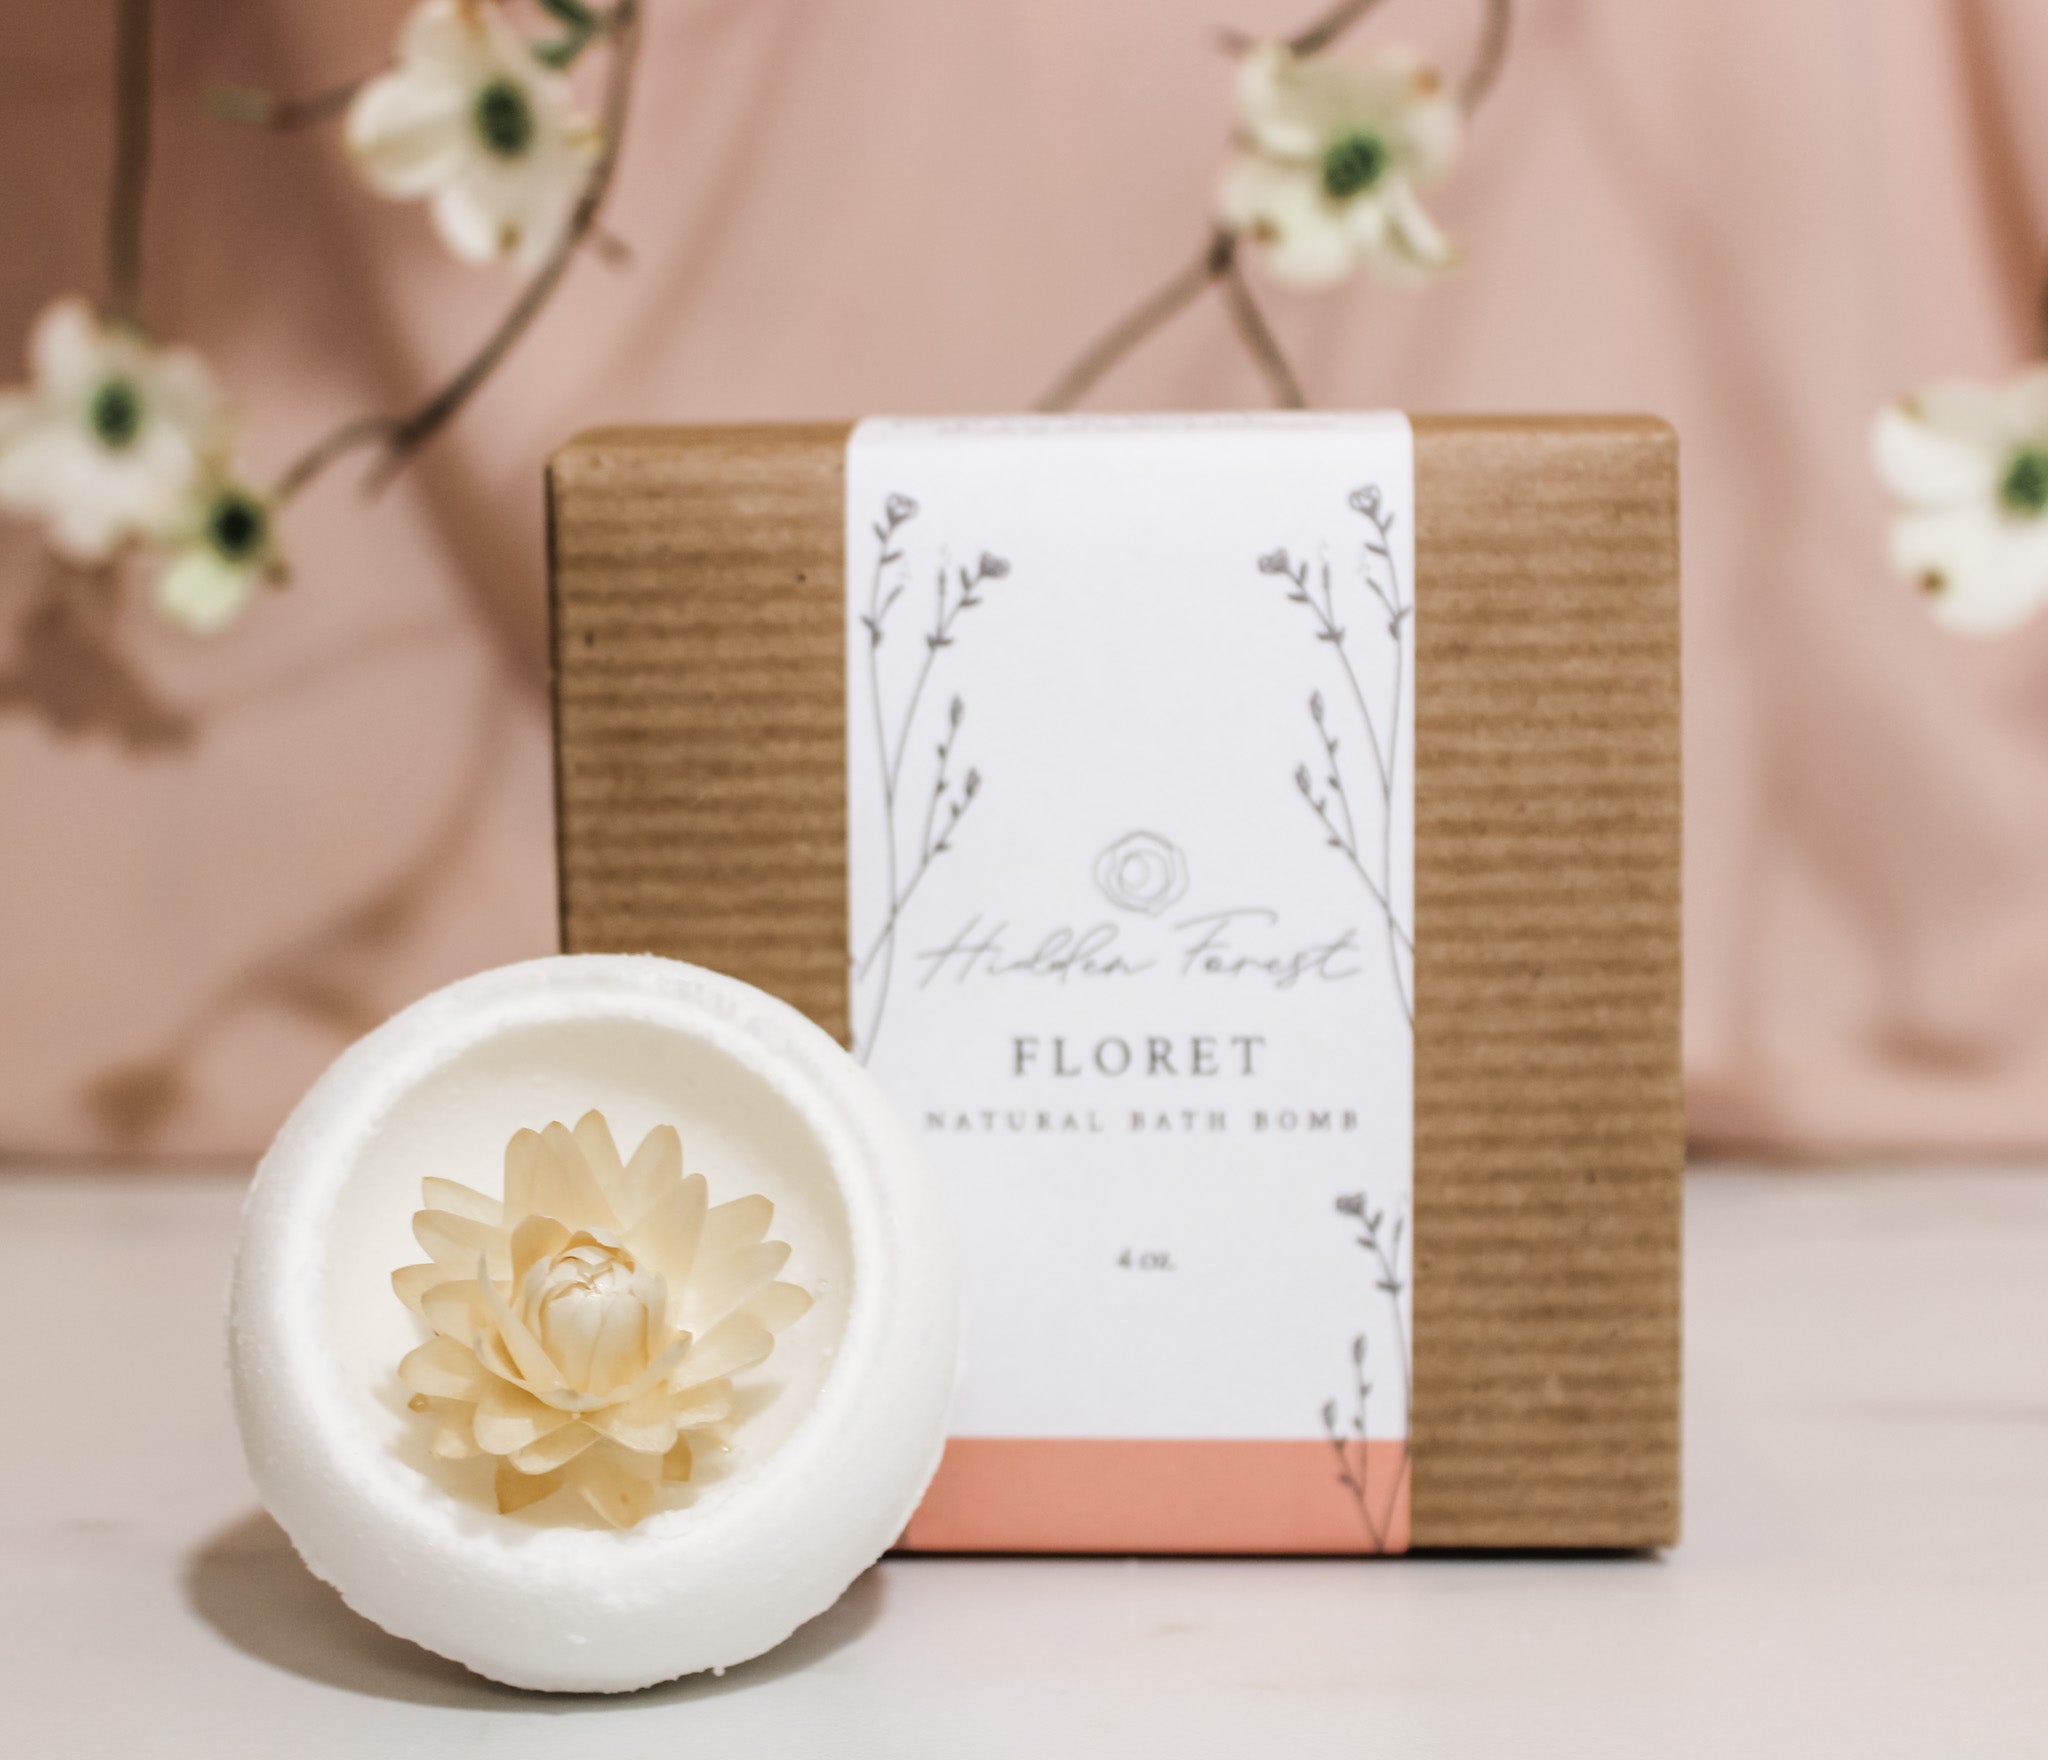 Floret Flower - Vegan Bath Bomb